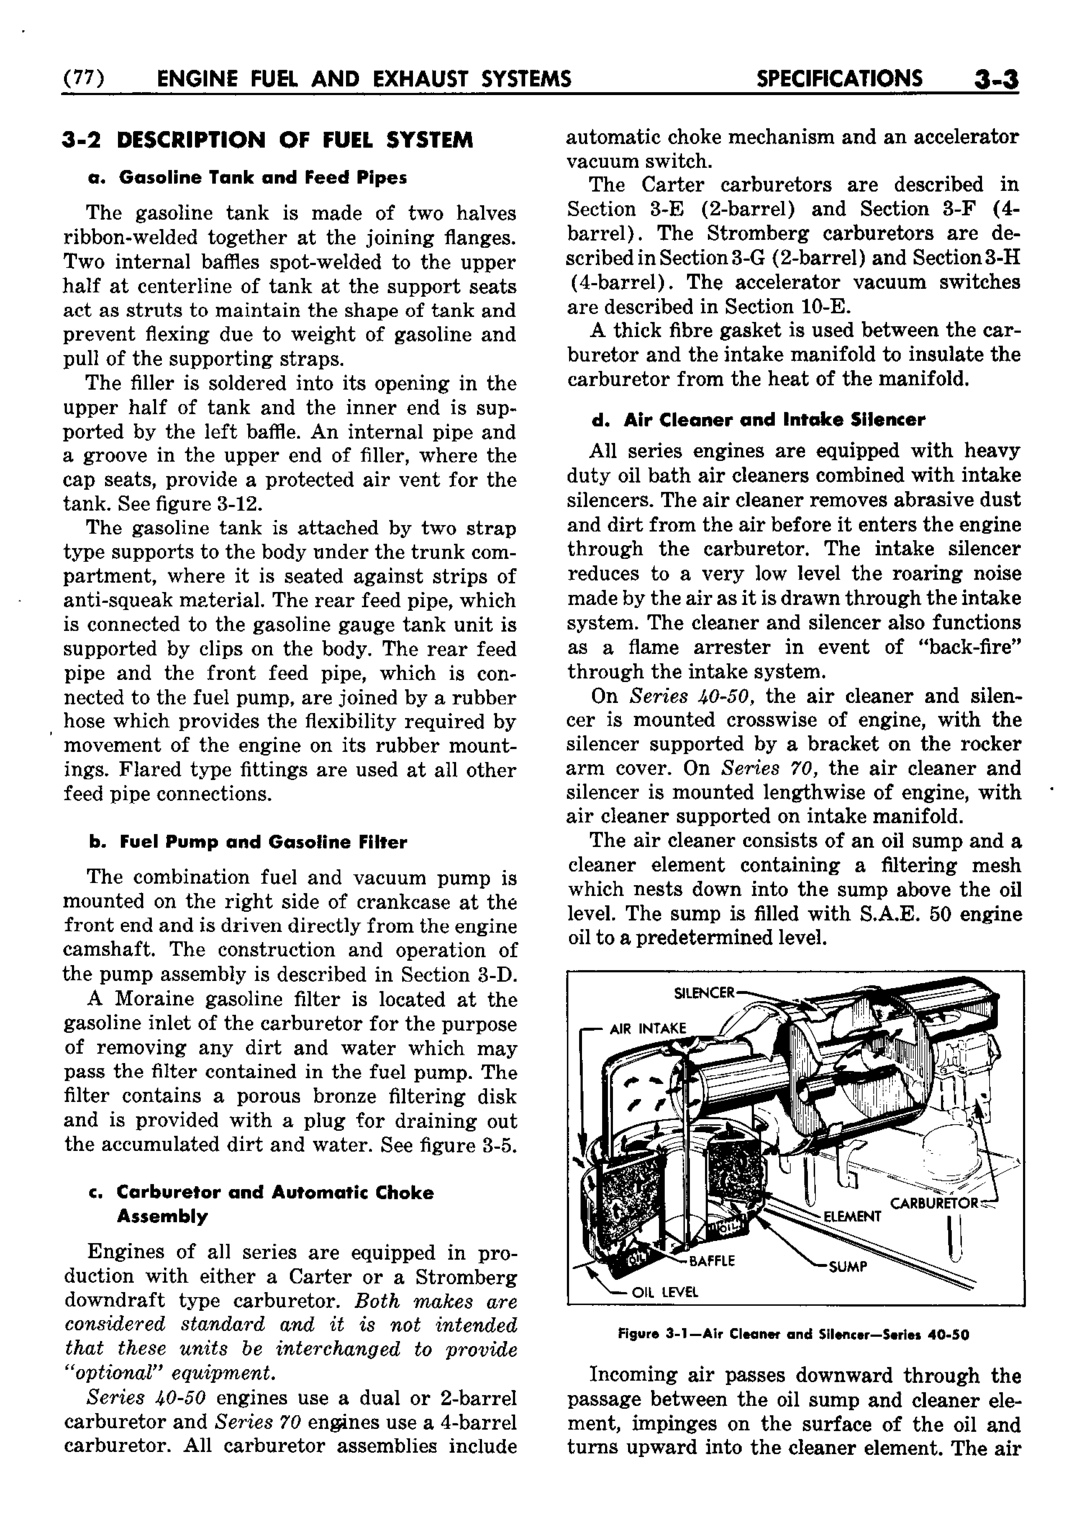 n_04 1952 Buick Shop Manual - Engine Fuel & Exhaust-003-003.jpg